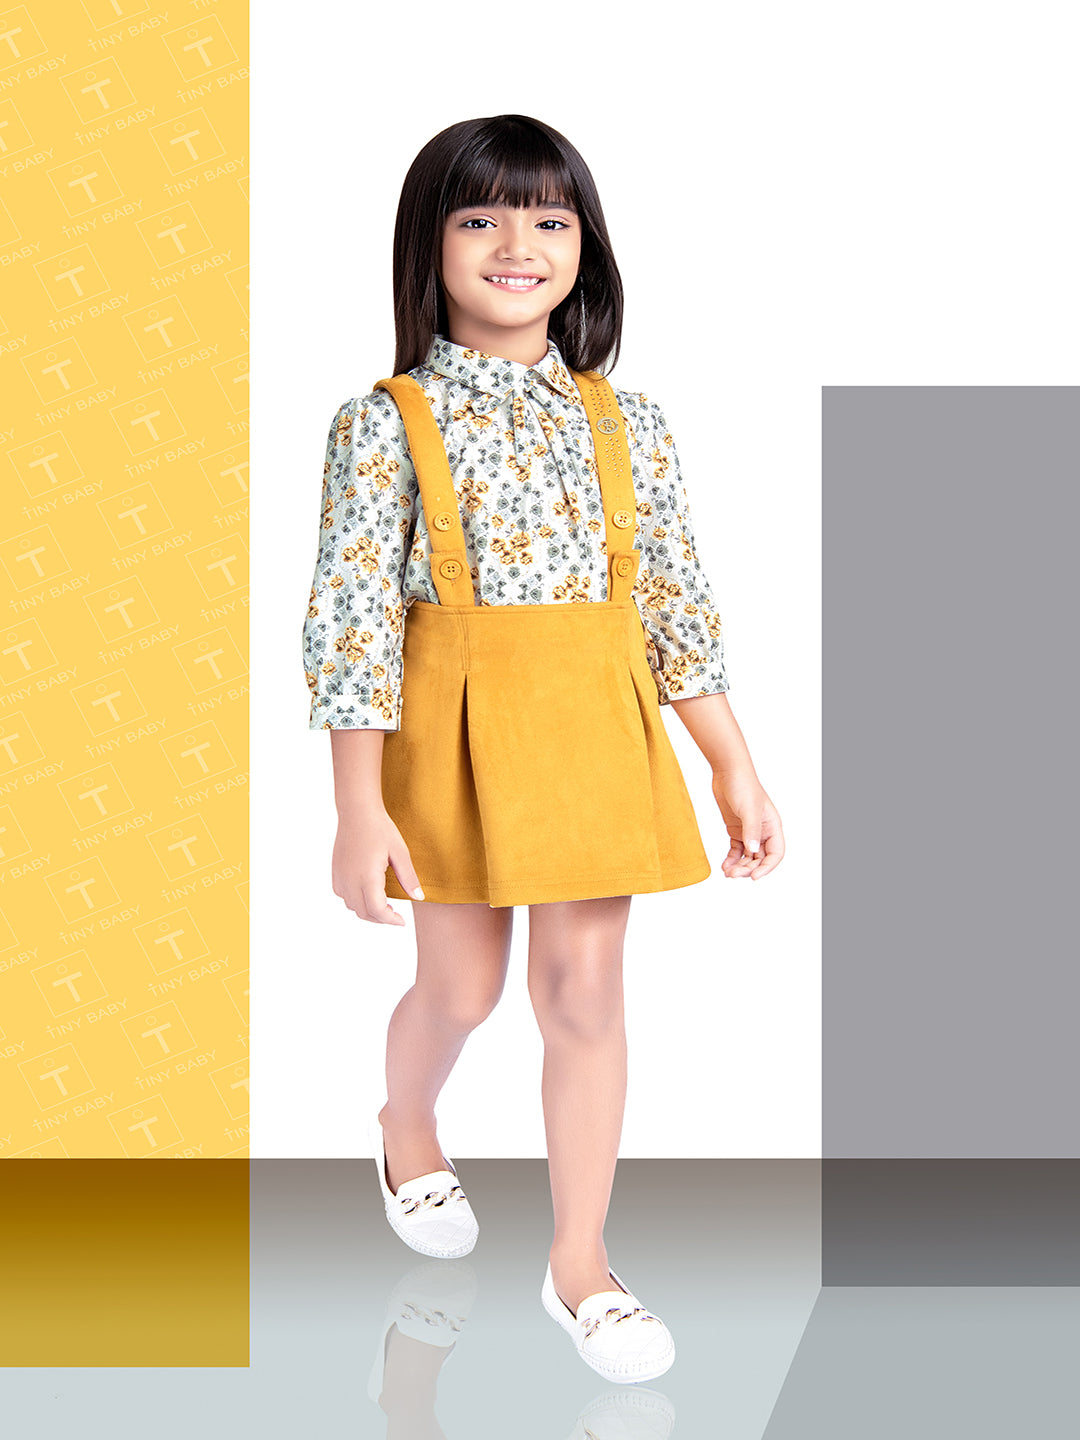 Tiny Baby Mustard Colored Skirt Set - 2120 Mustard